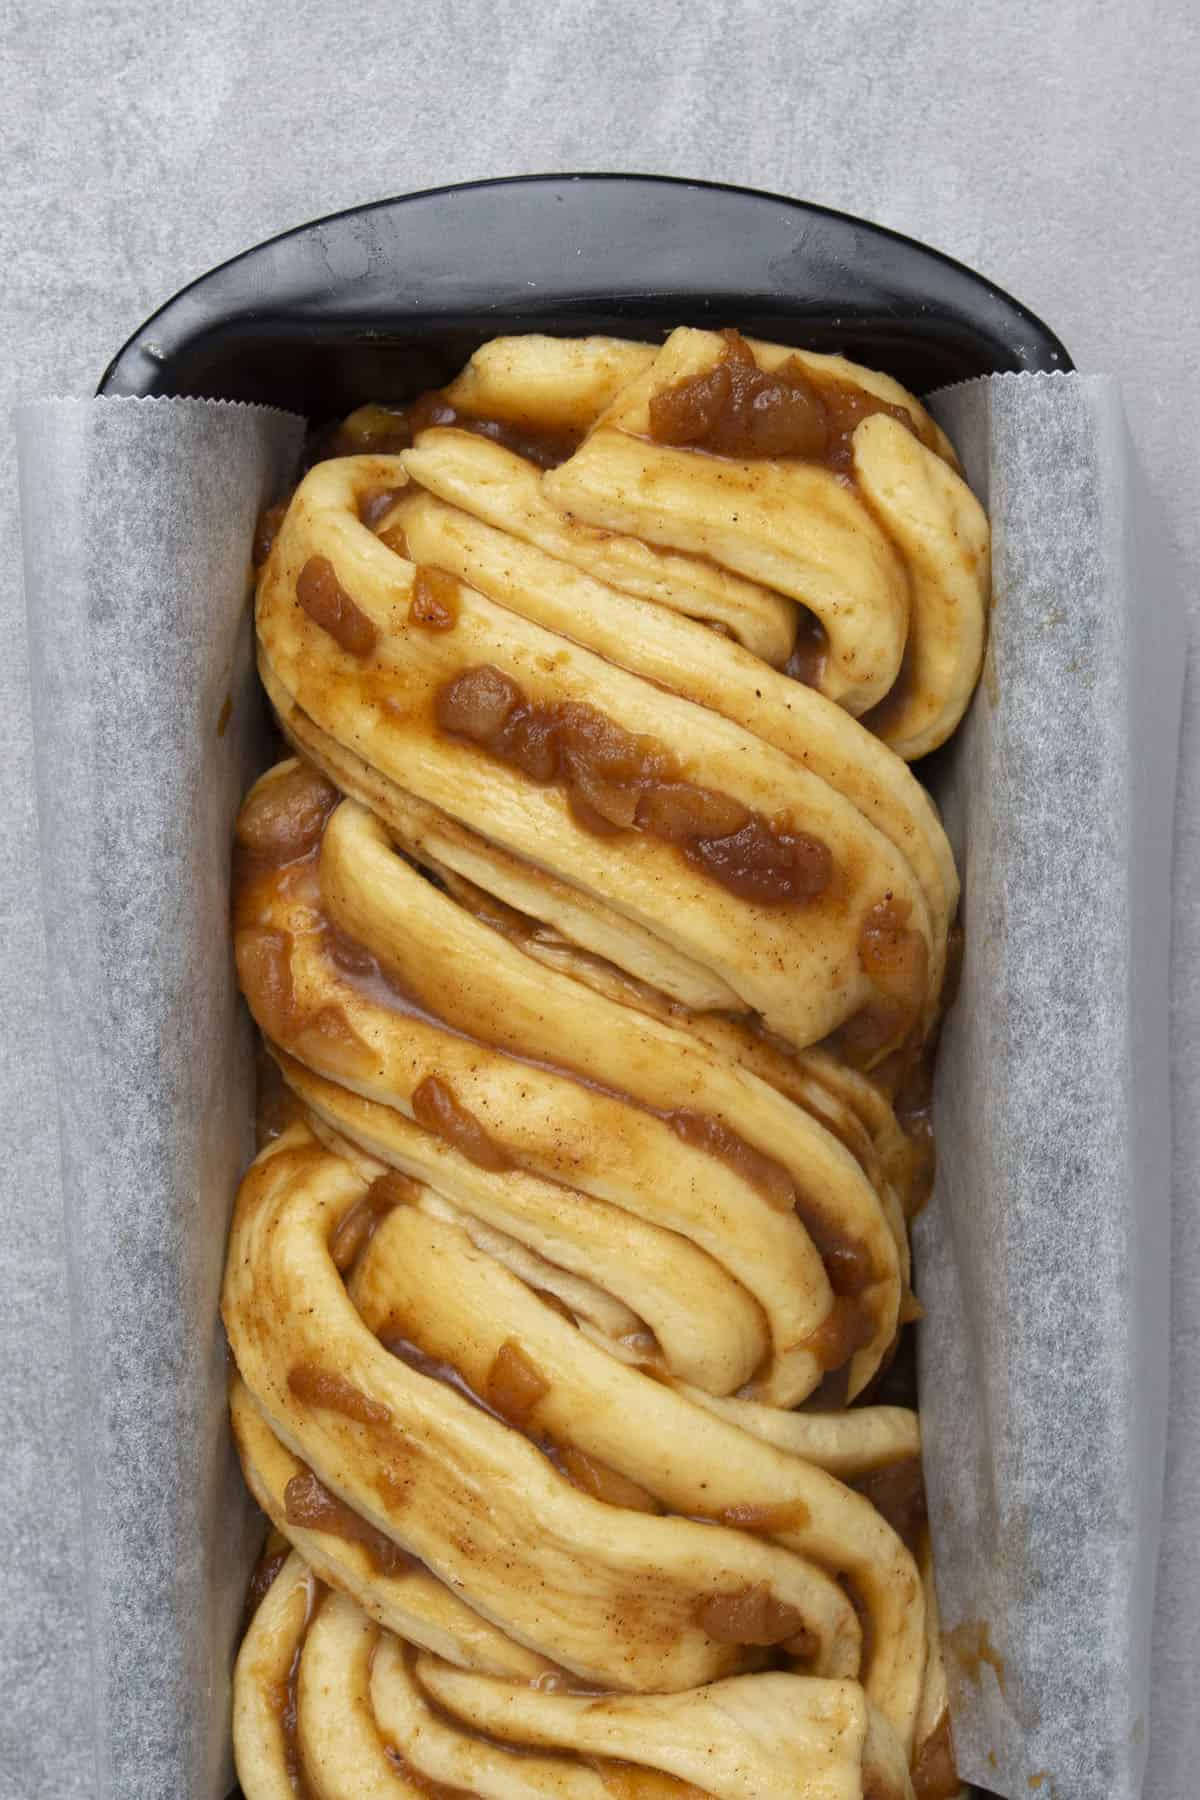 Cinnamon apple babka in a baking pan before baking.